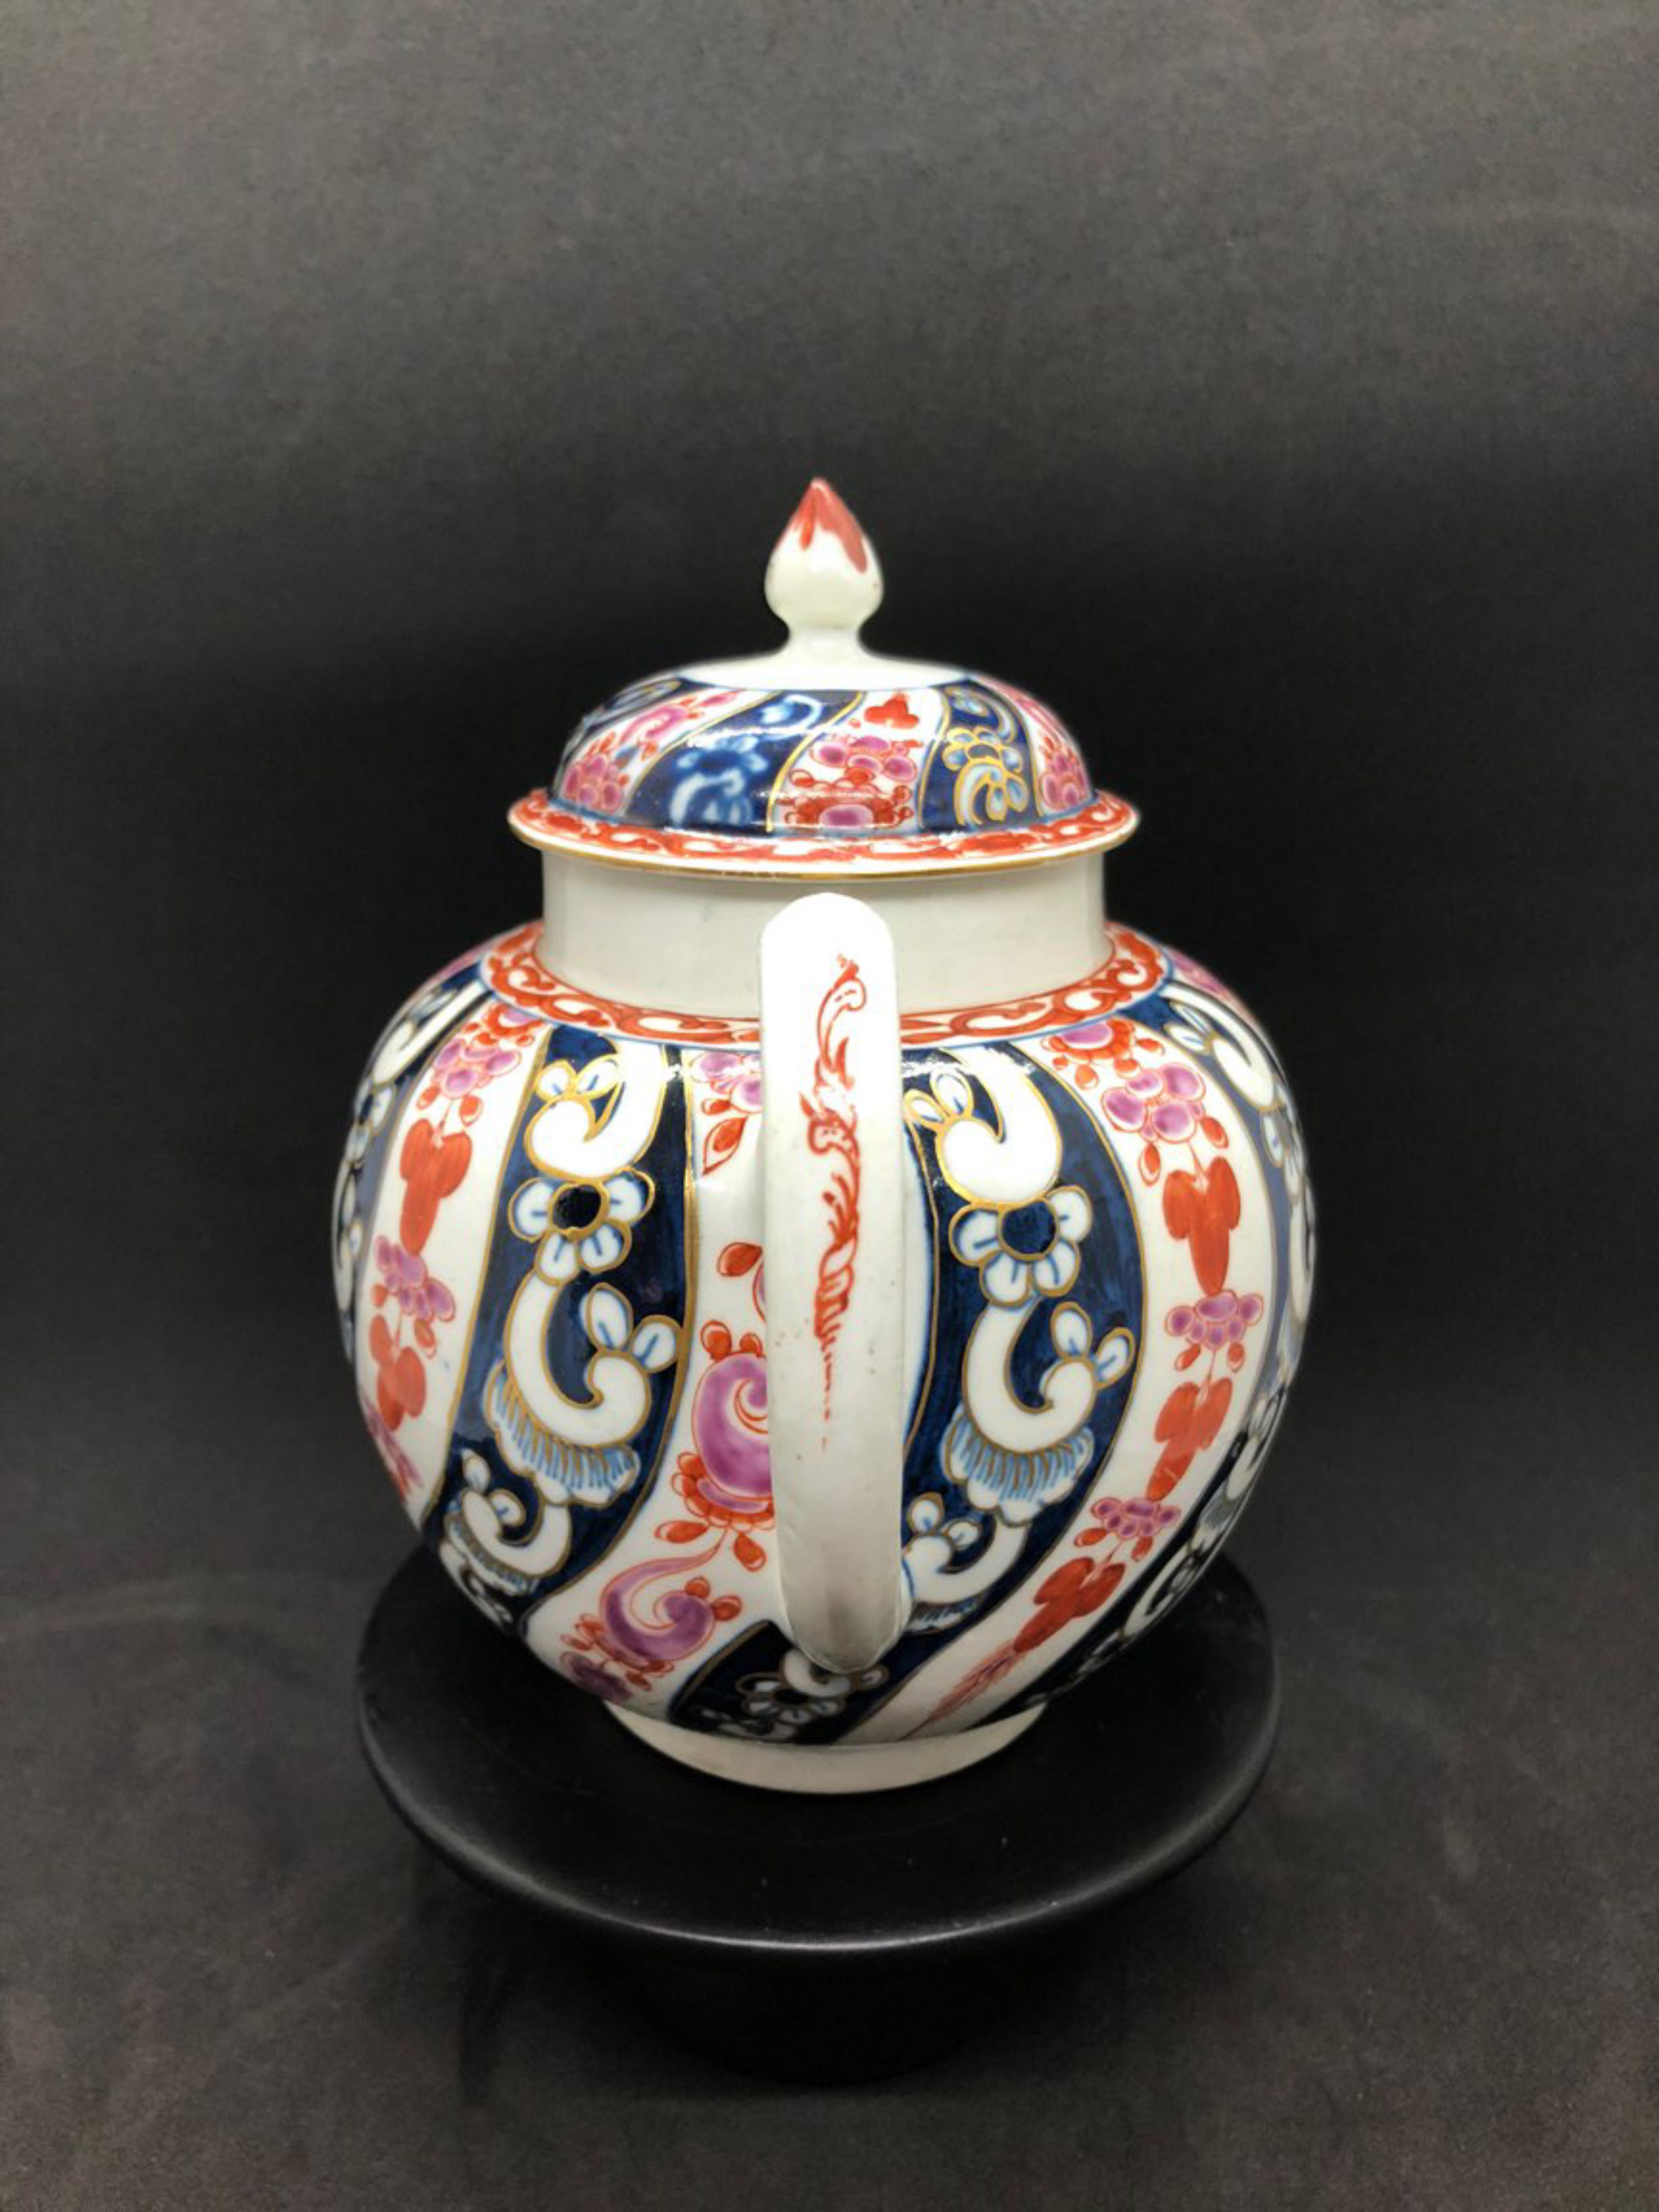 Dr Wall period Worcester globular teapot  Queen Charlotte pattern